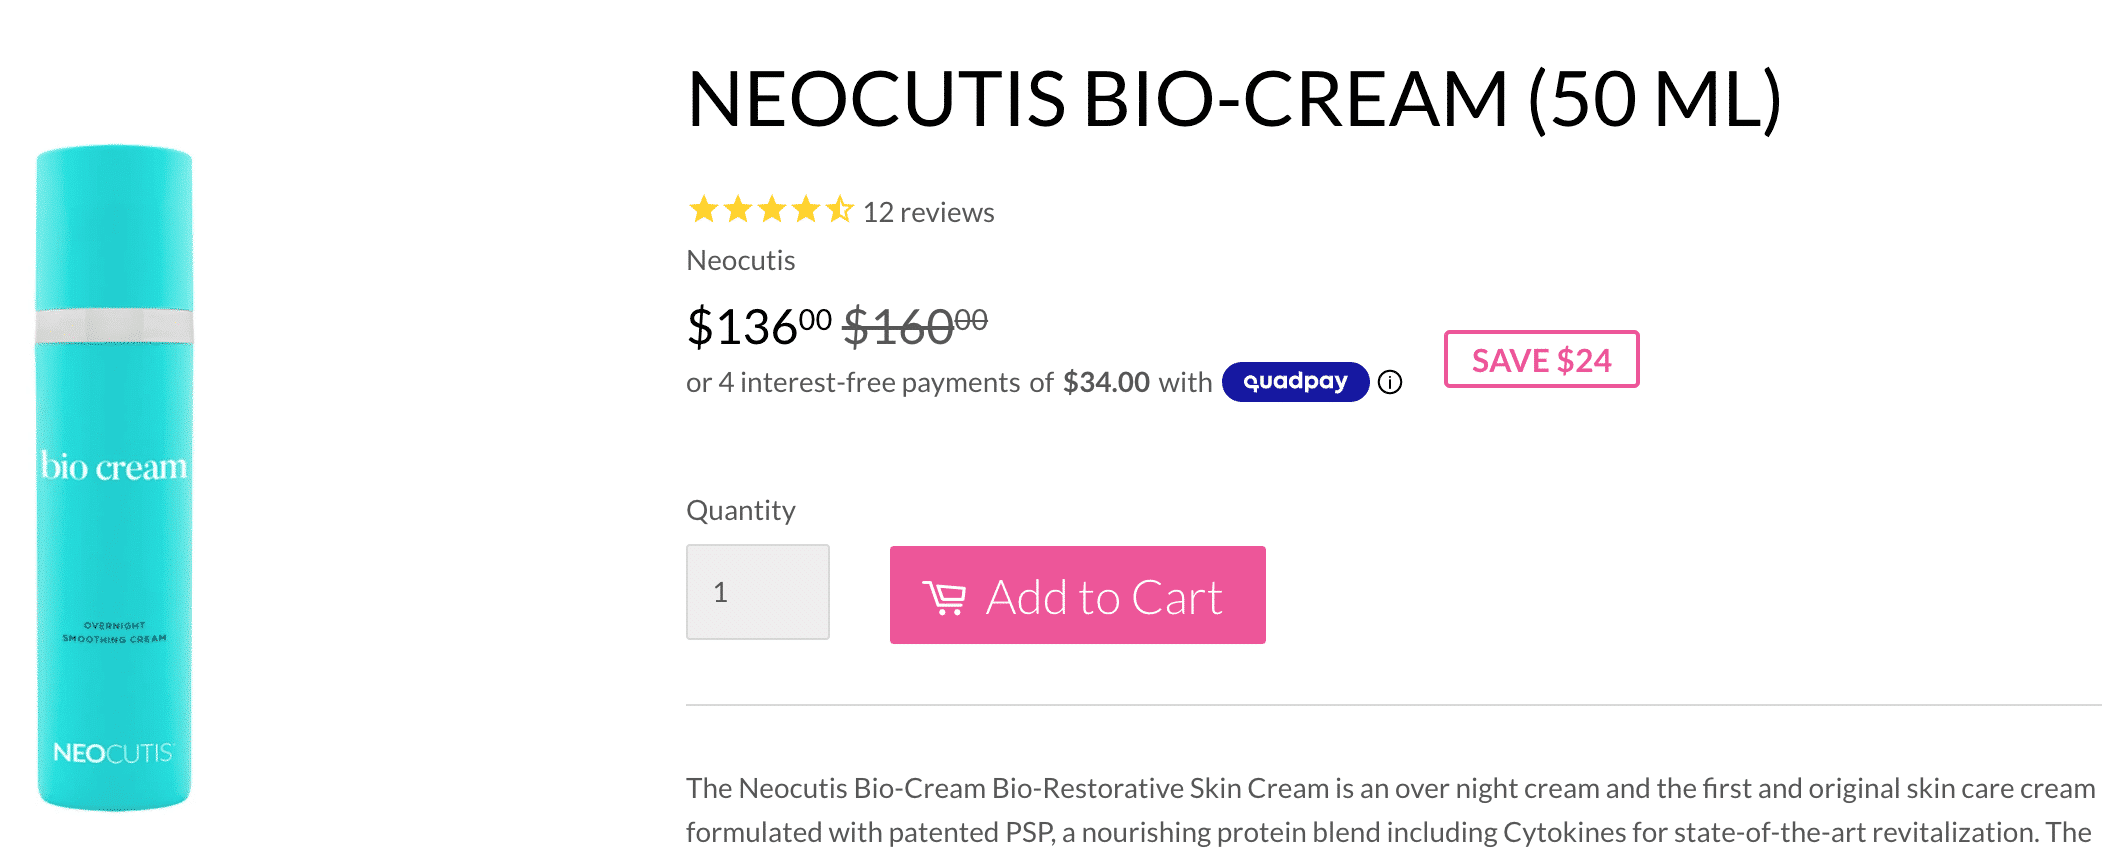 neocutis bio-cream, an example aborted fetal cells in cosmetics development